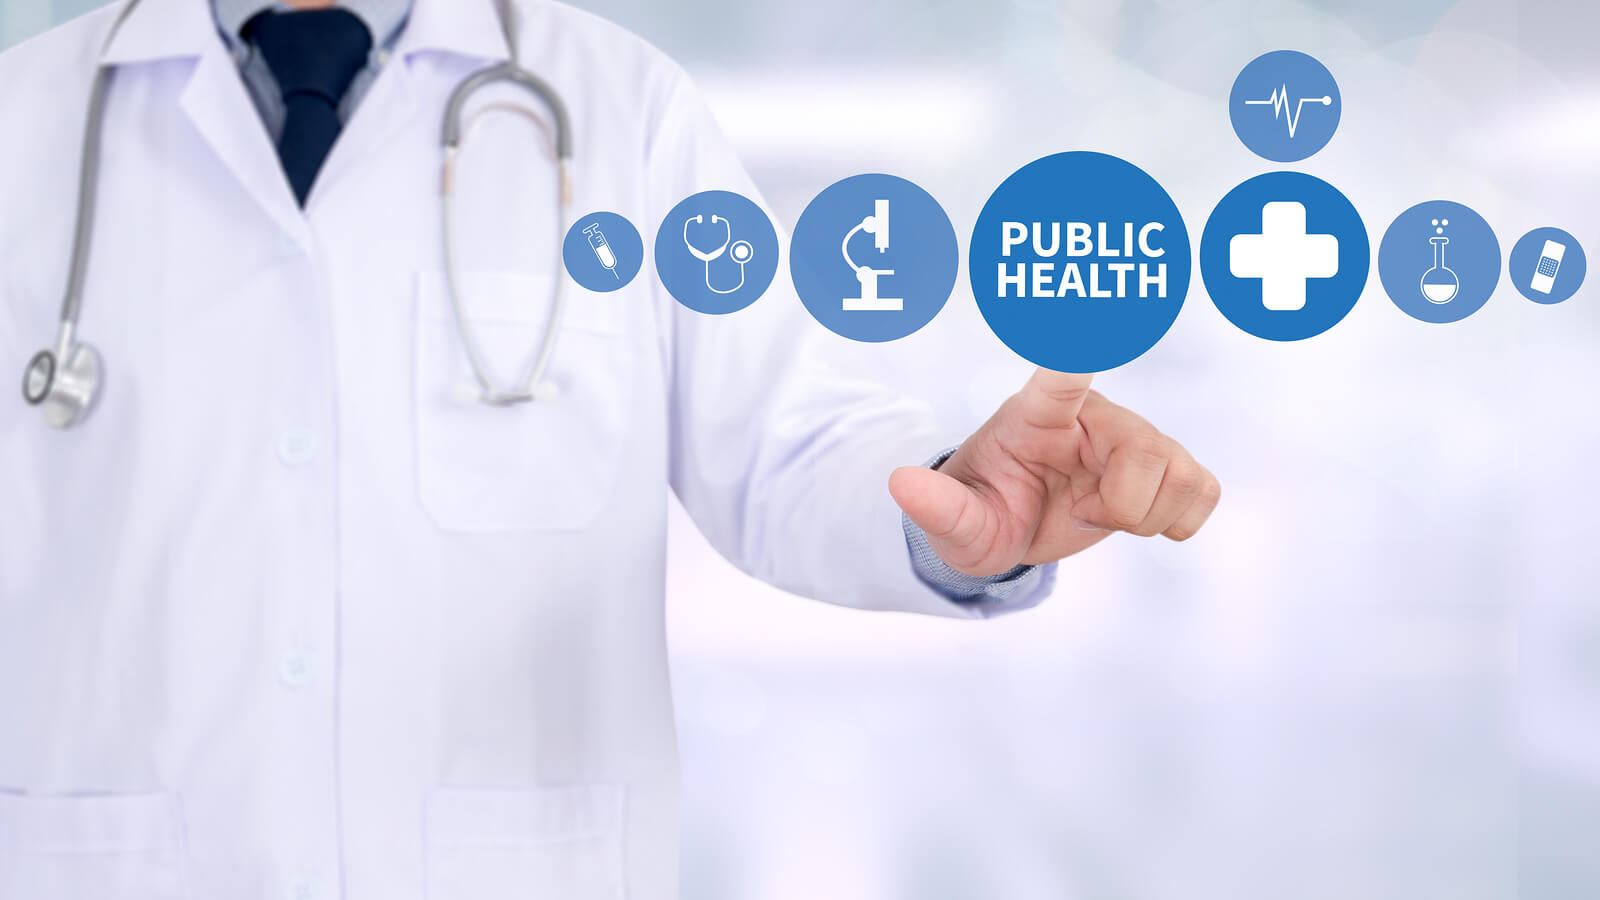 Are Public Health Jobs in Demand?